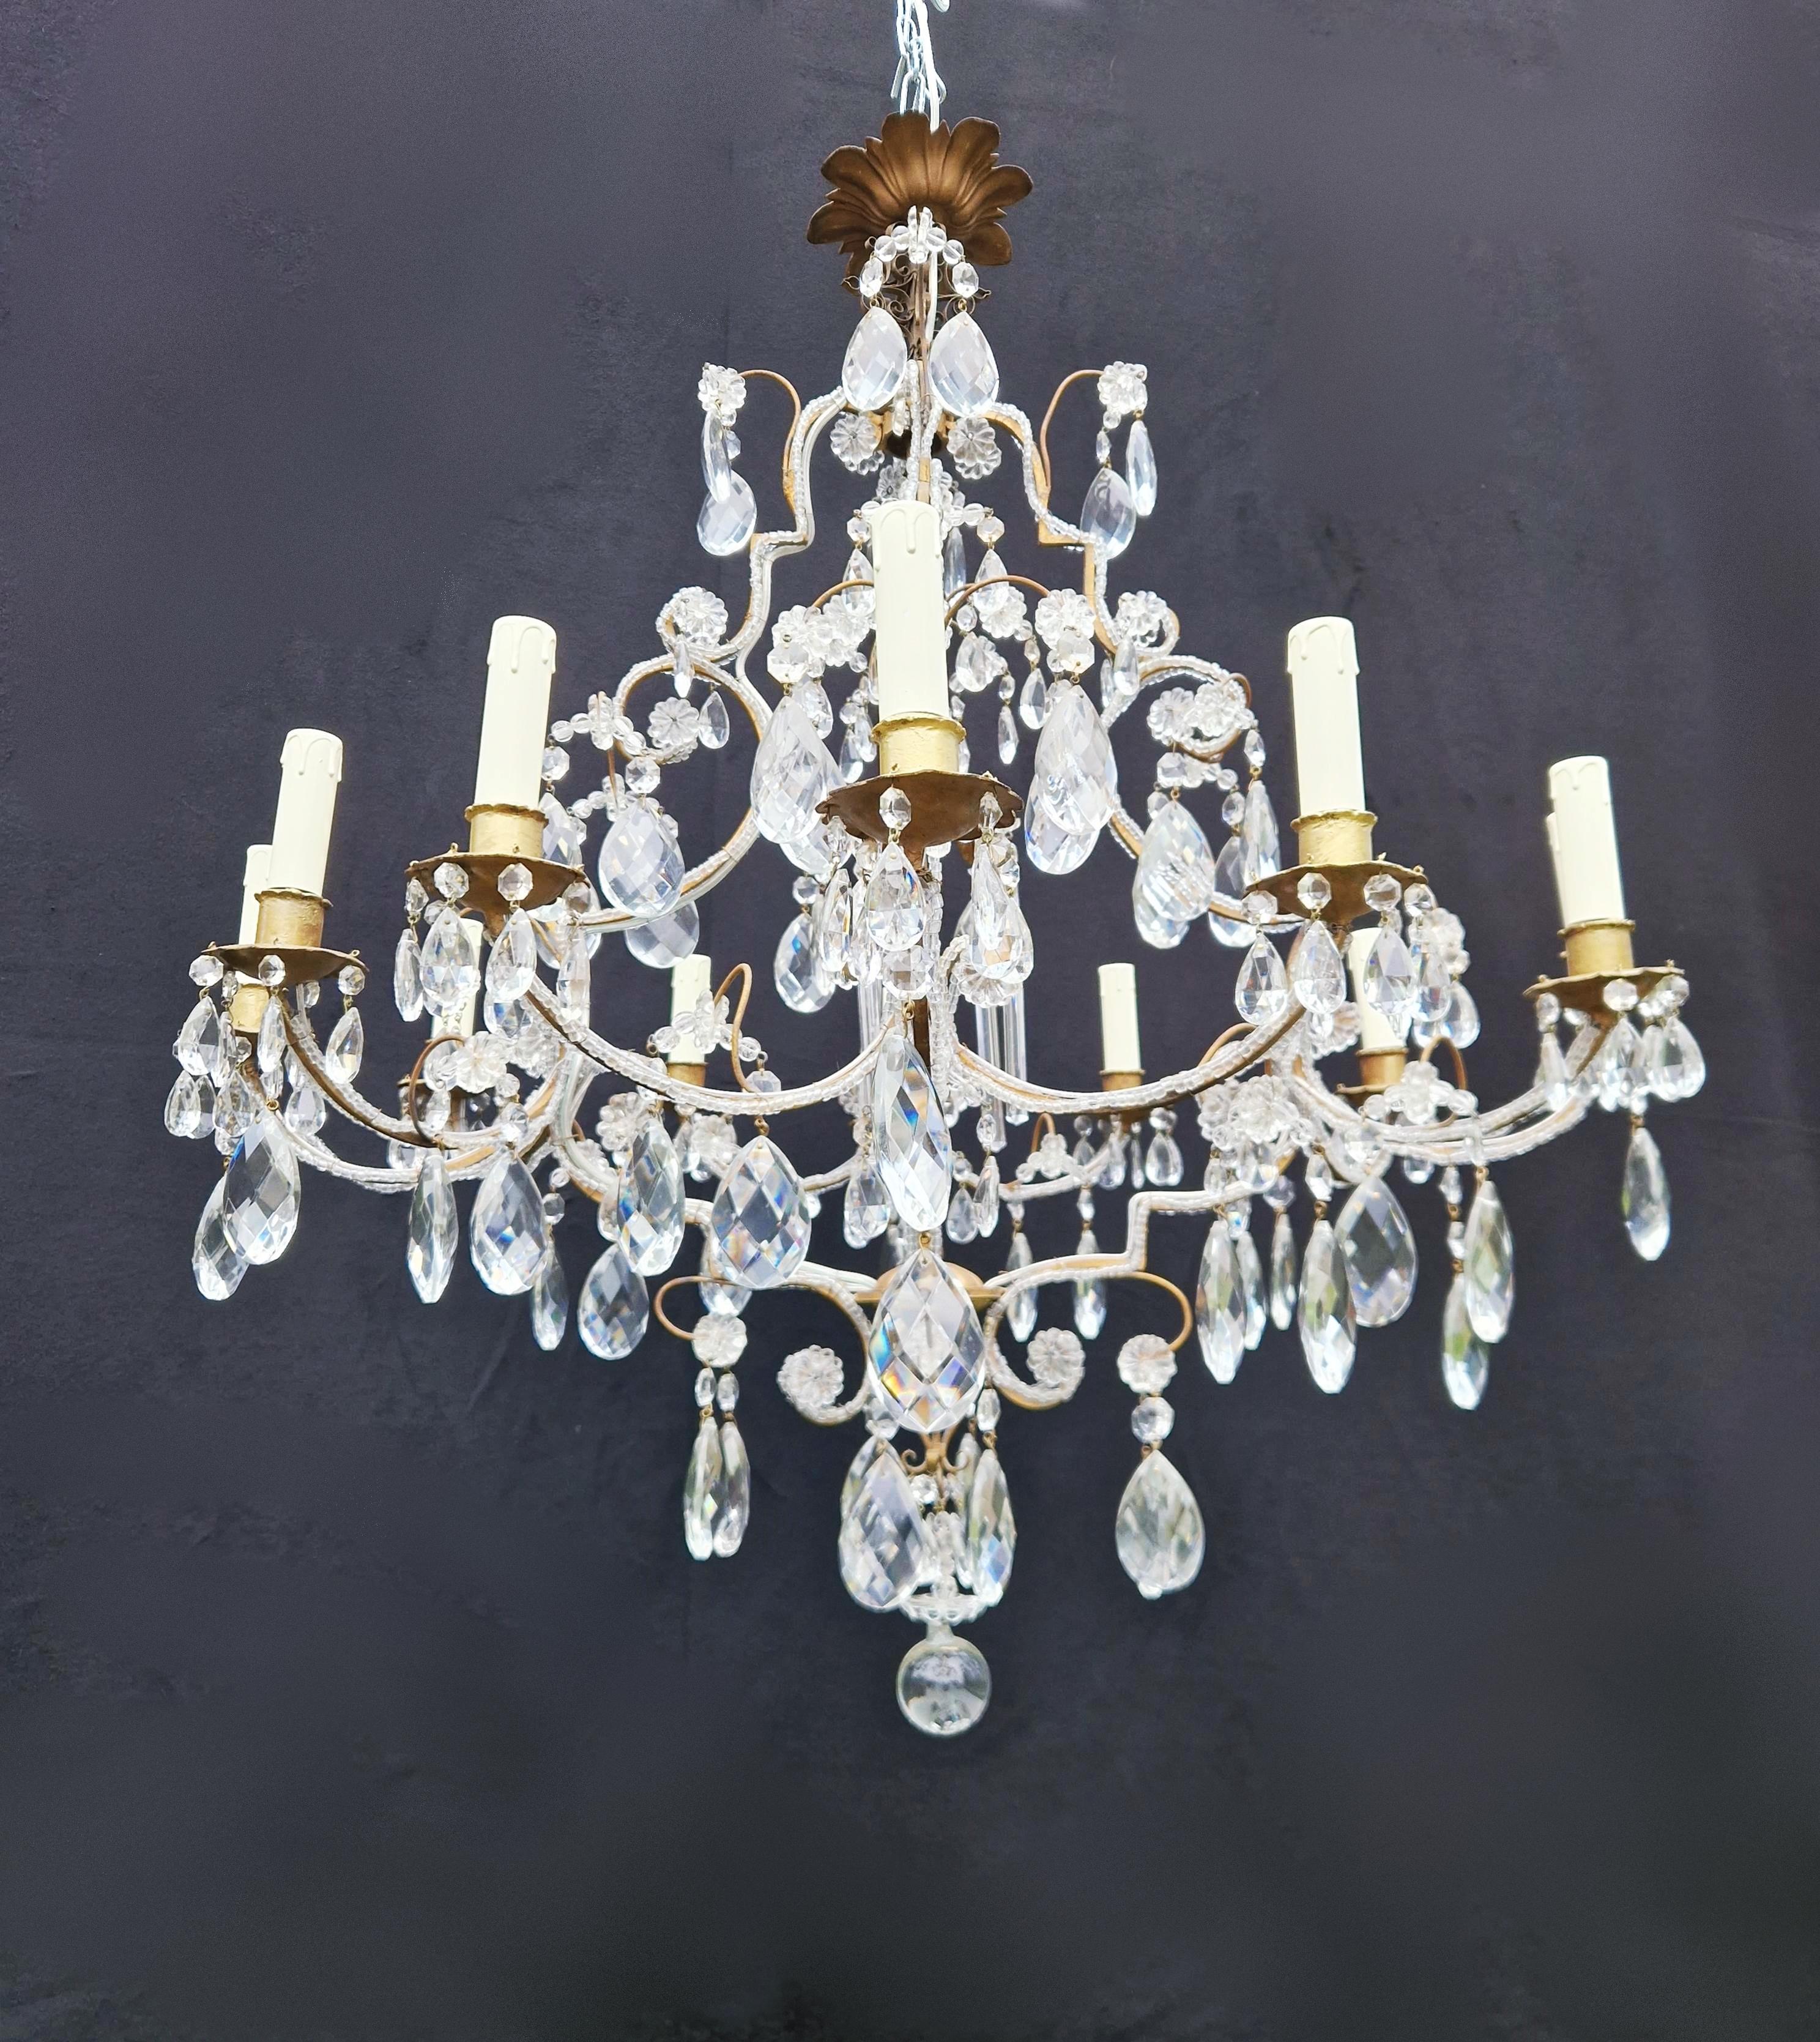 Hand-Knotted Brass Crystal Chandelier Antique Ceiling Lamp Lustre Art Nouveau Gold